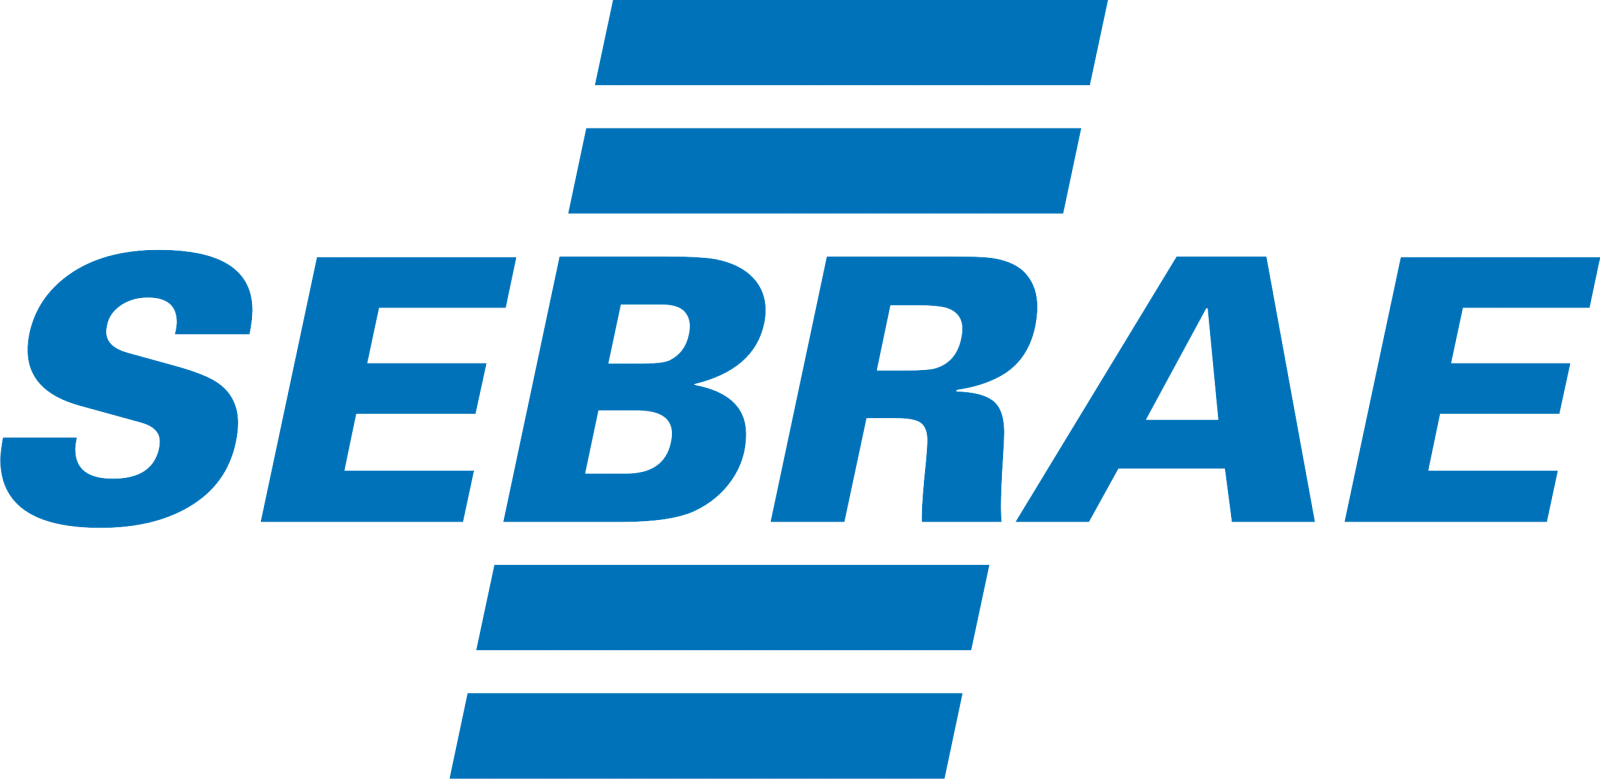 Logomarca do cliente Sebrae